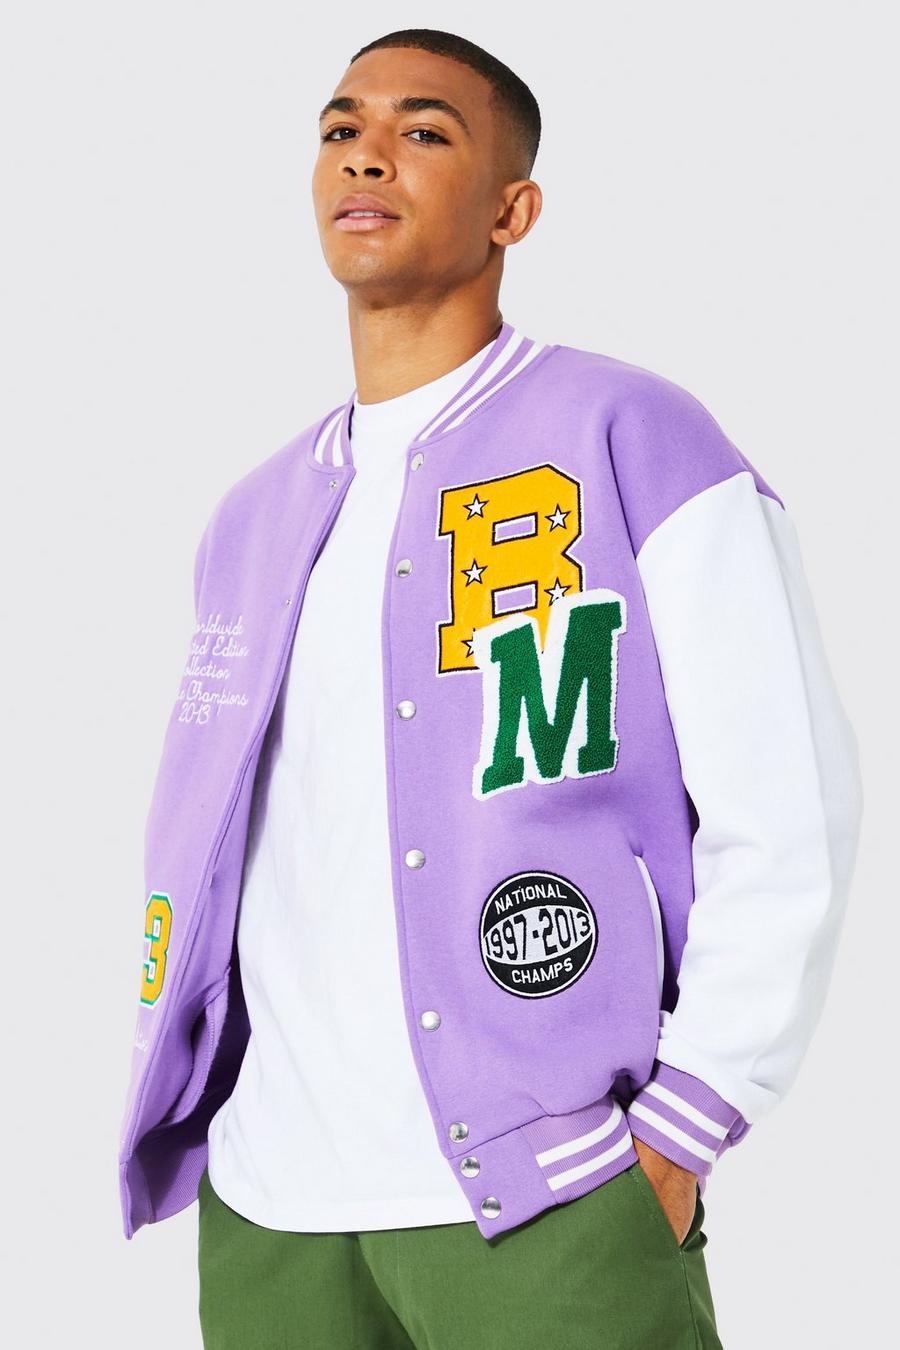 Bm Jersey Varsity Jacket